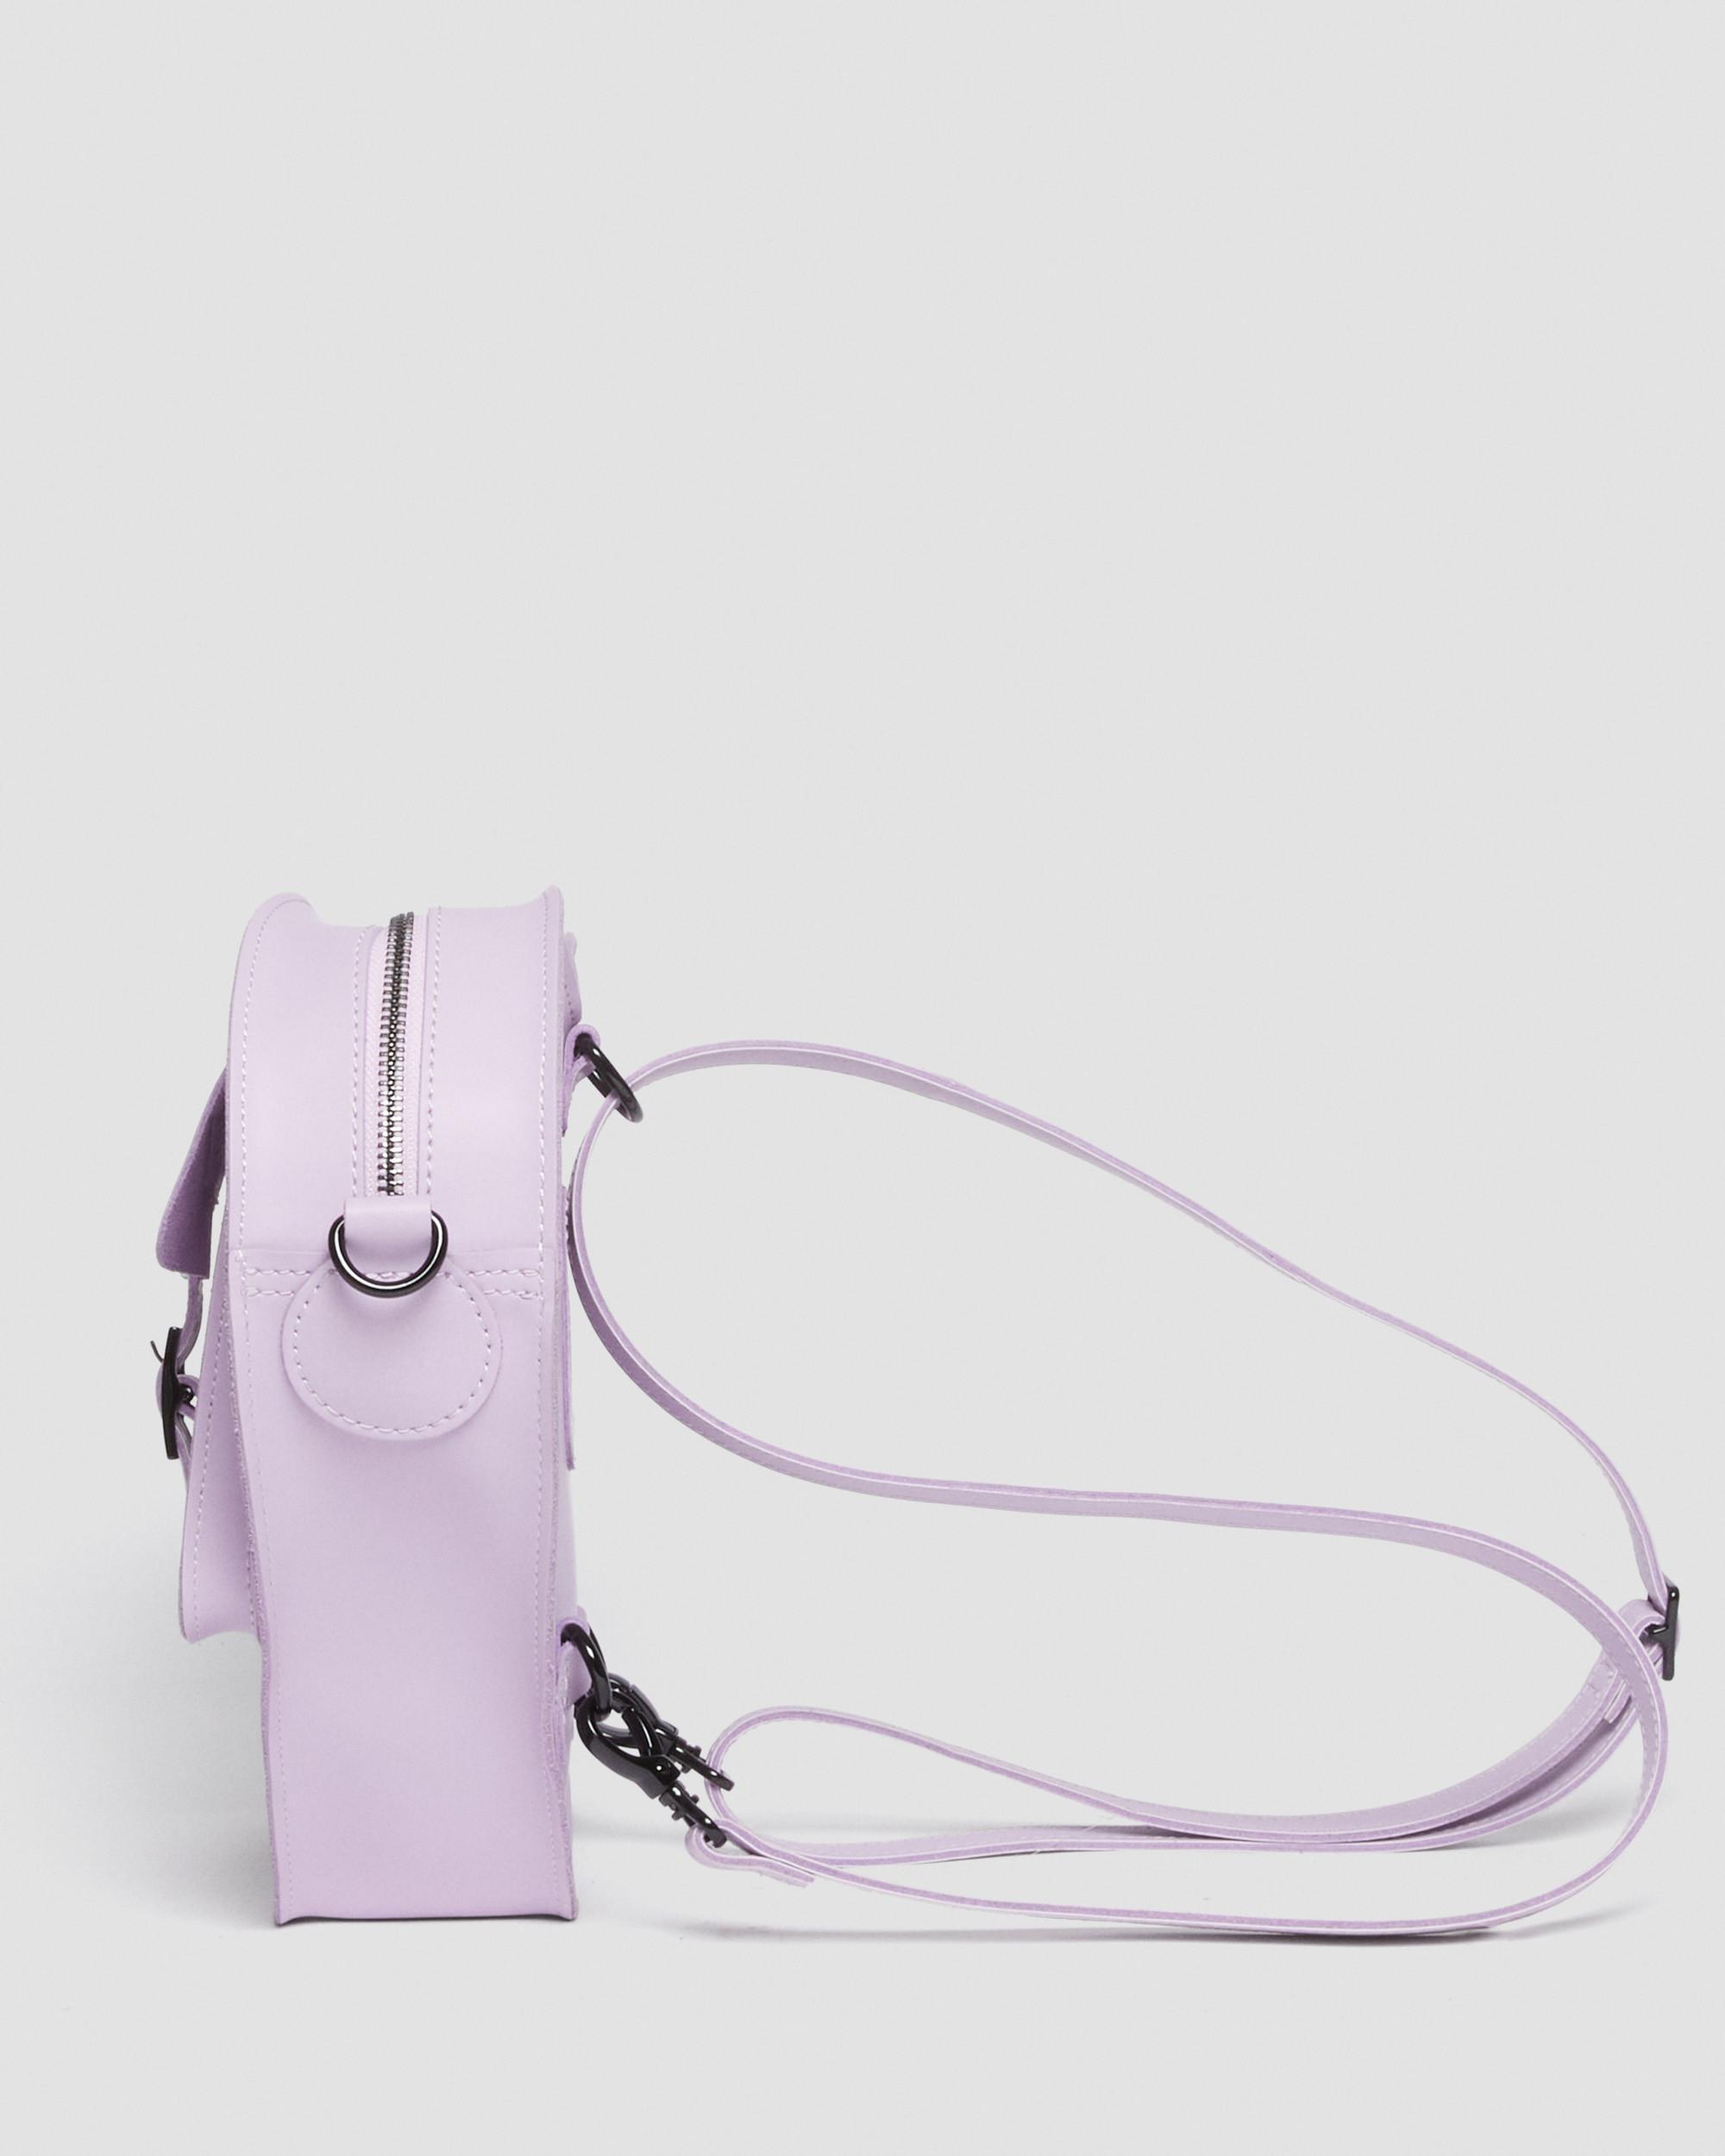 Dr. Martens, Accessories, Brand New Dr Martens Heart Bag